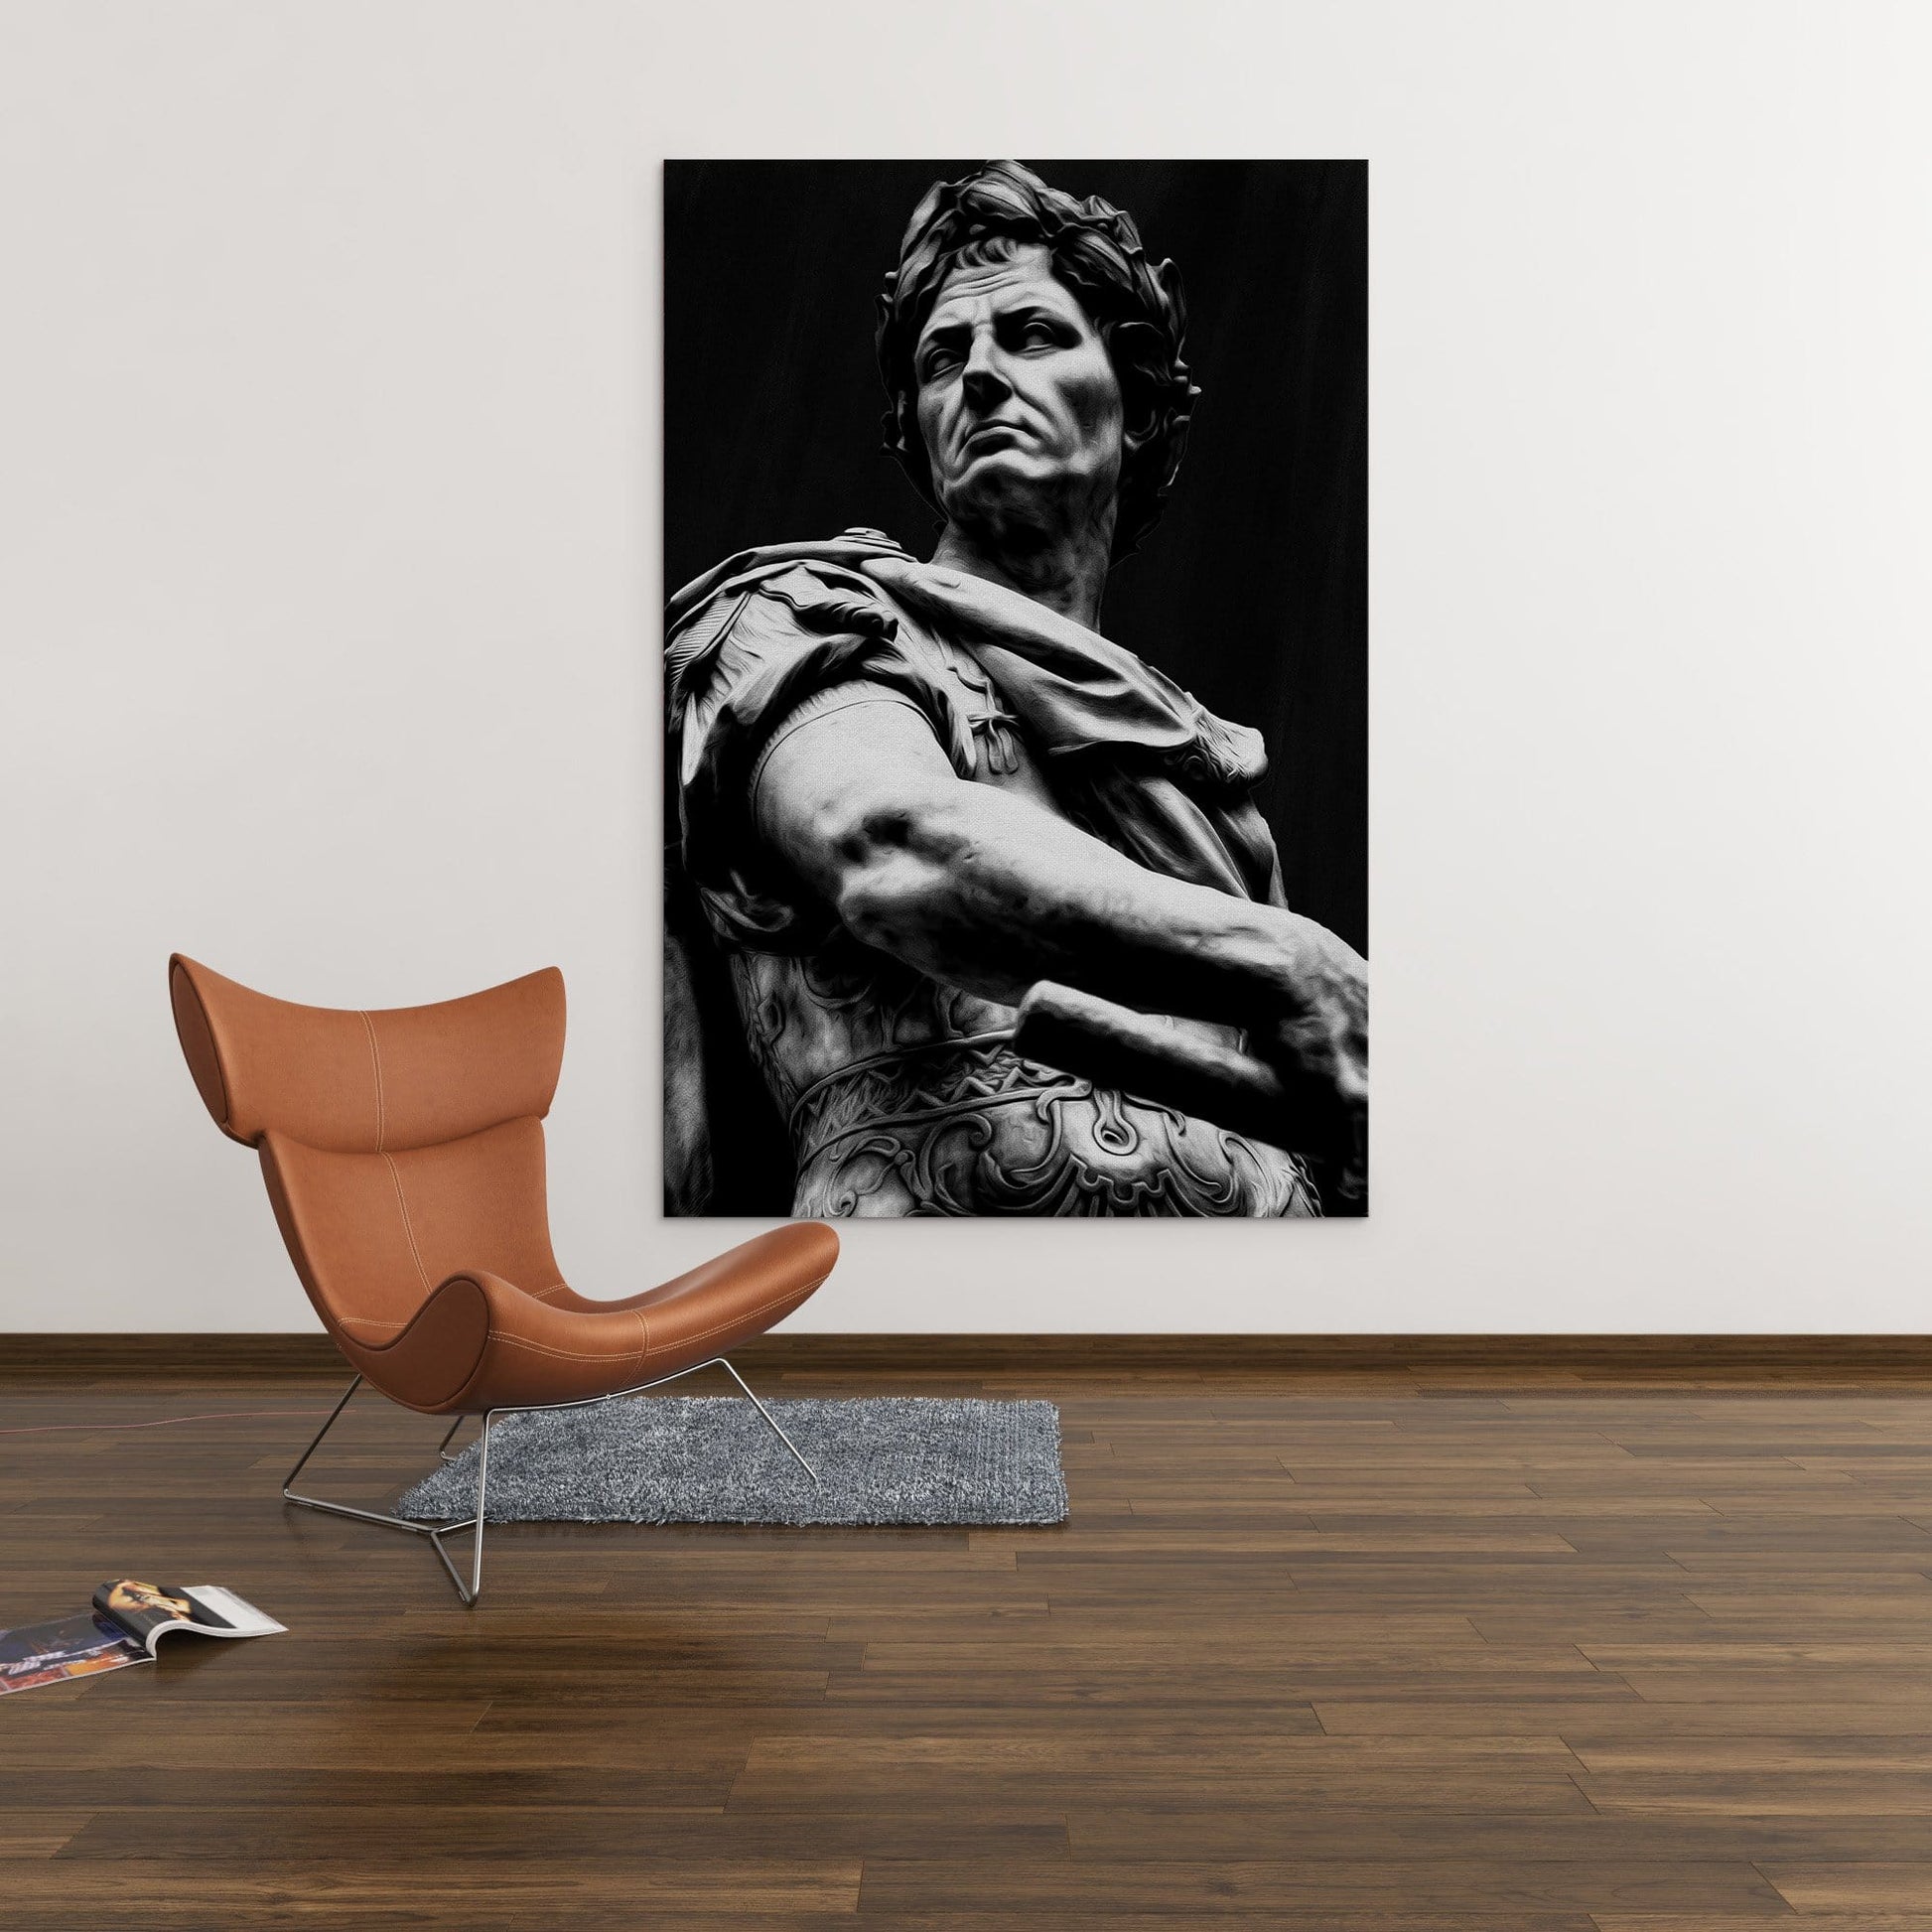 Julius Caesar Sculpture Black & White Wall Art | Inspirational Wall Art Motivational Wall Art Quotes Office Art | ImpaktMaker Exclusive Canvas Art Portrait